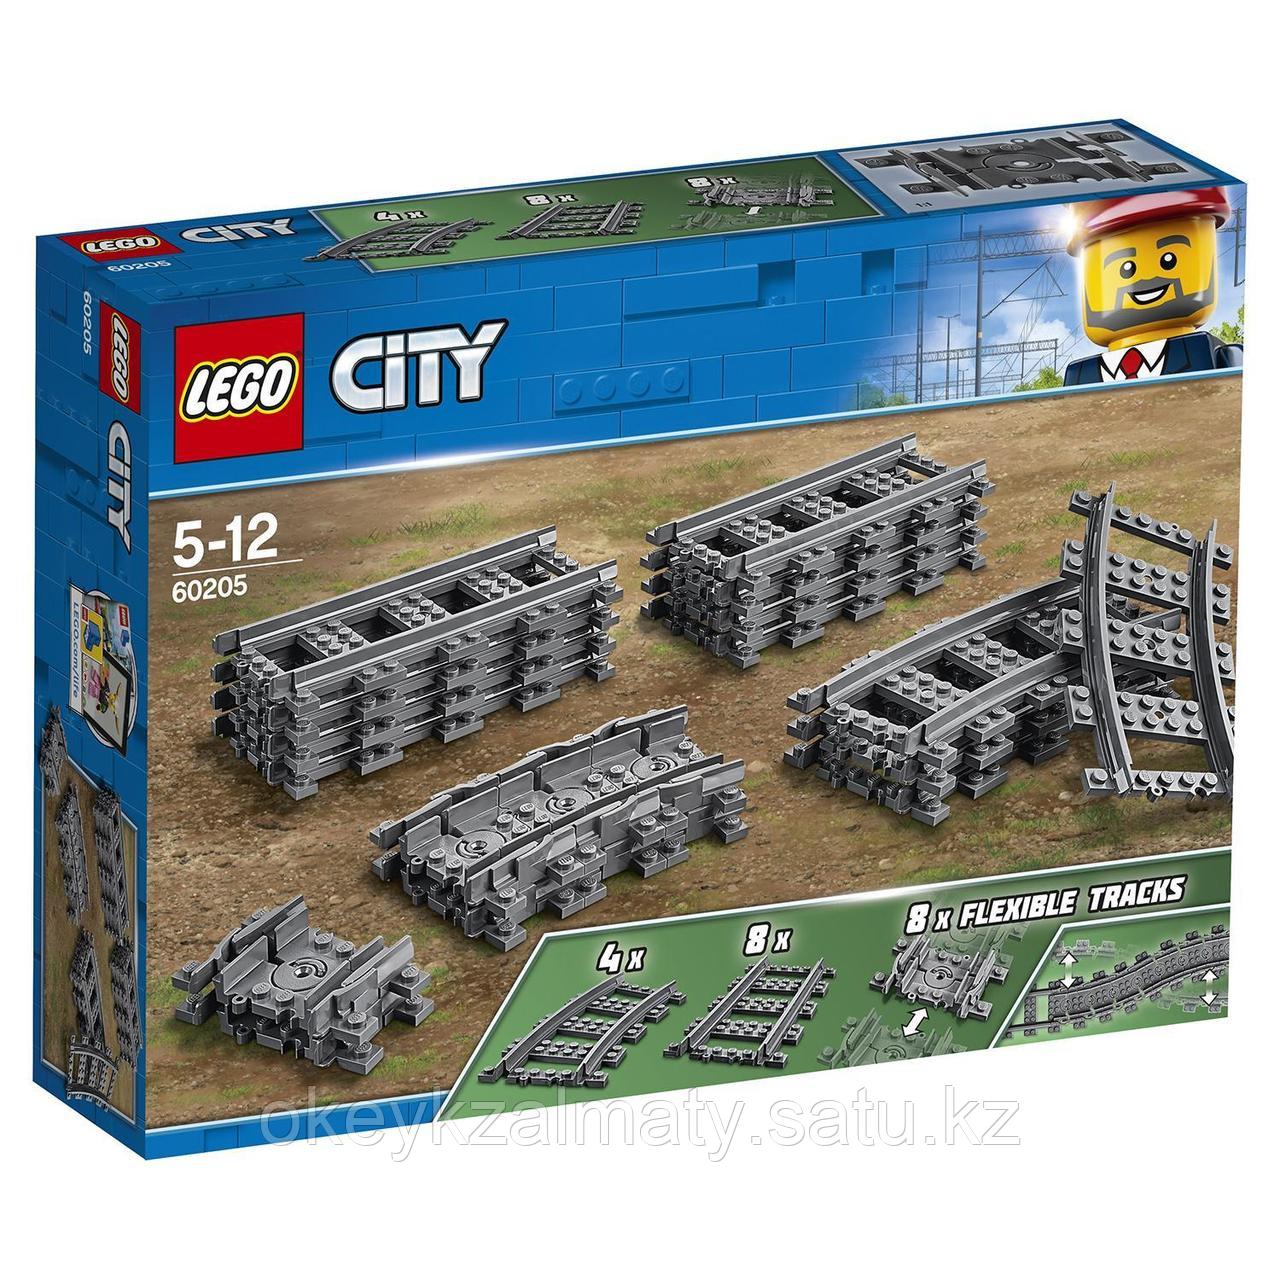 LEGO City: Рельсы 60205